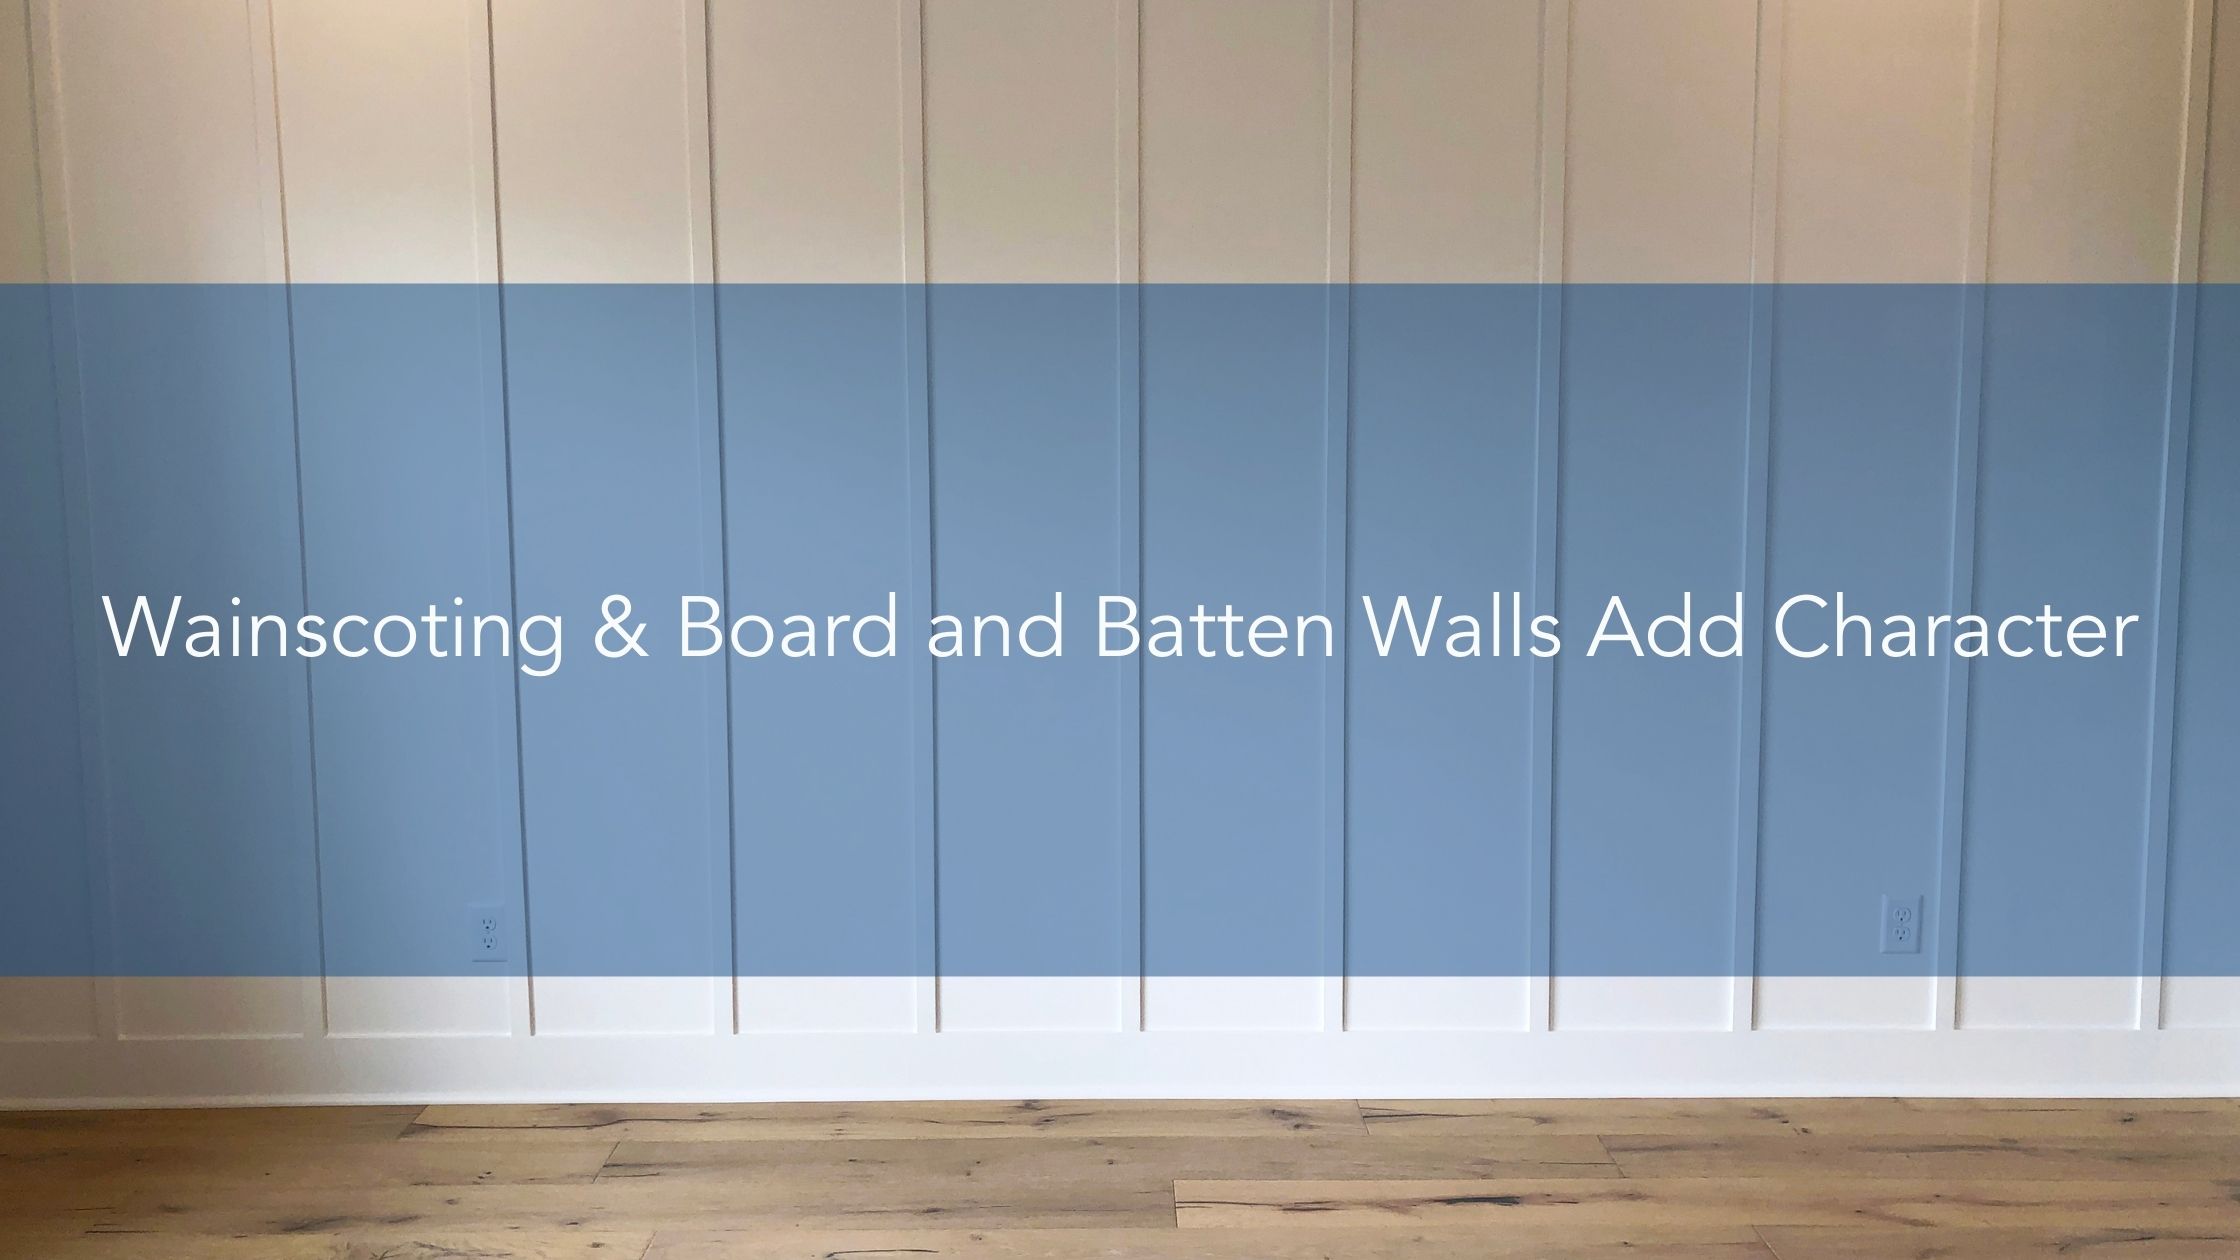 https://handymanconnection.com/wp-content/uploads/2022/01/Wainscoting-Board-and-Batten-Walls-Add-Character.jpg